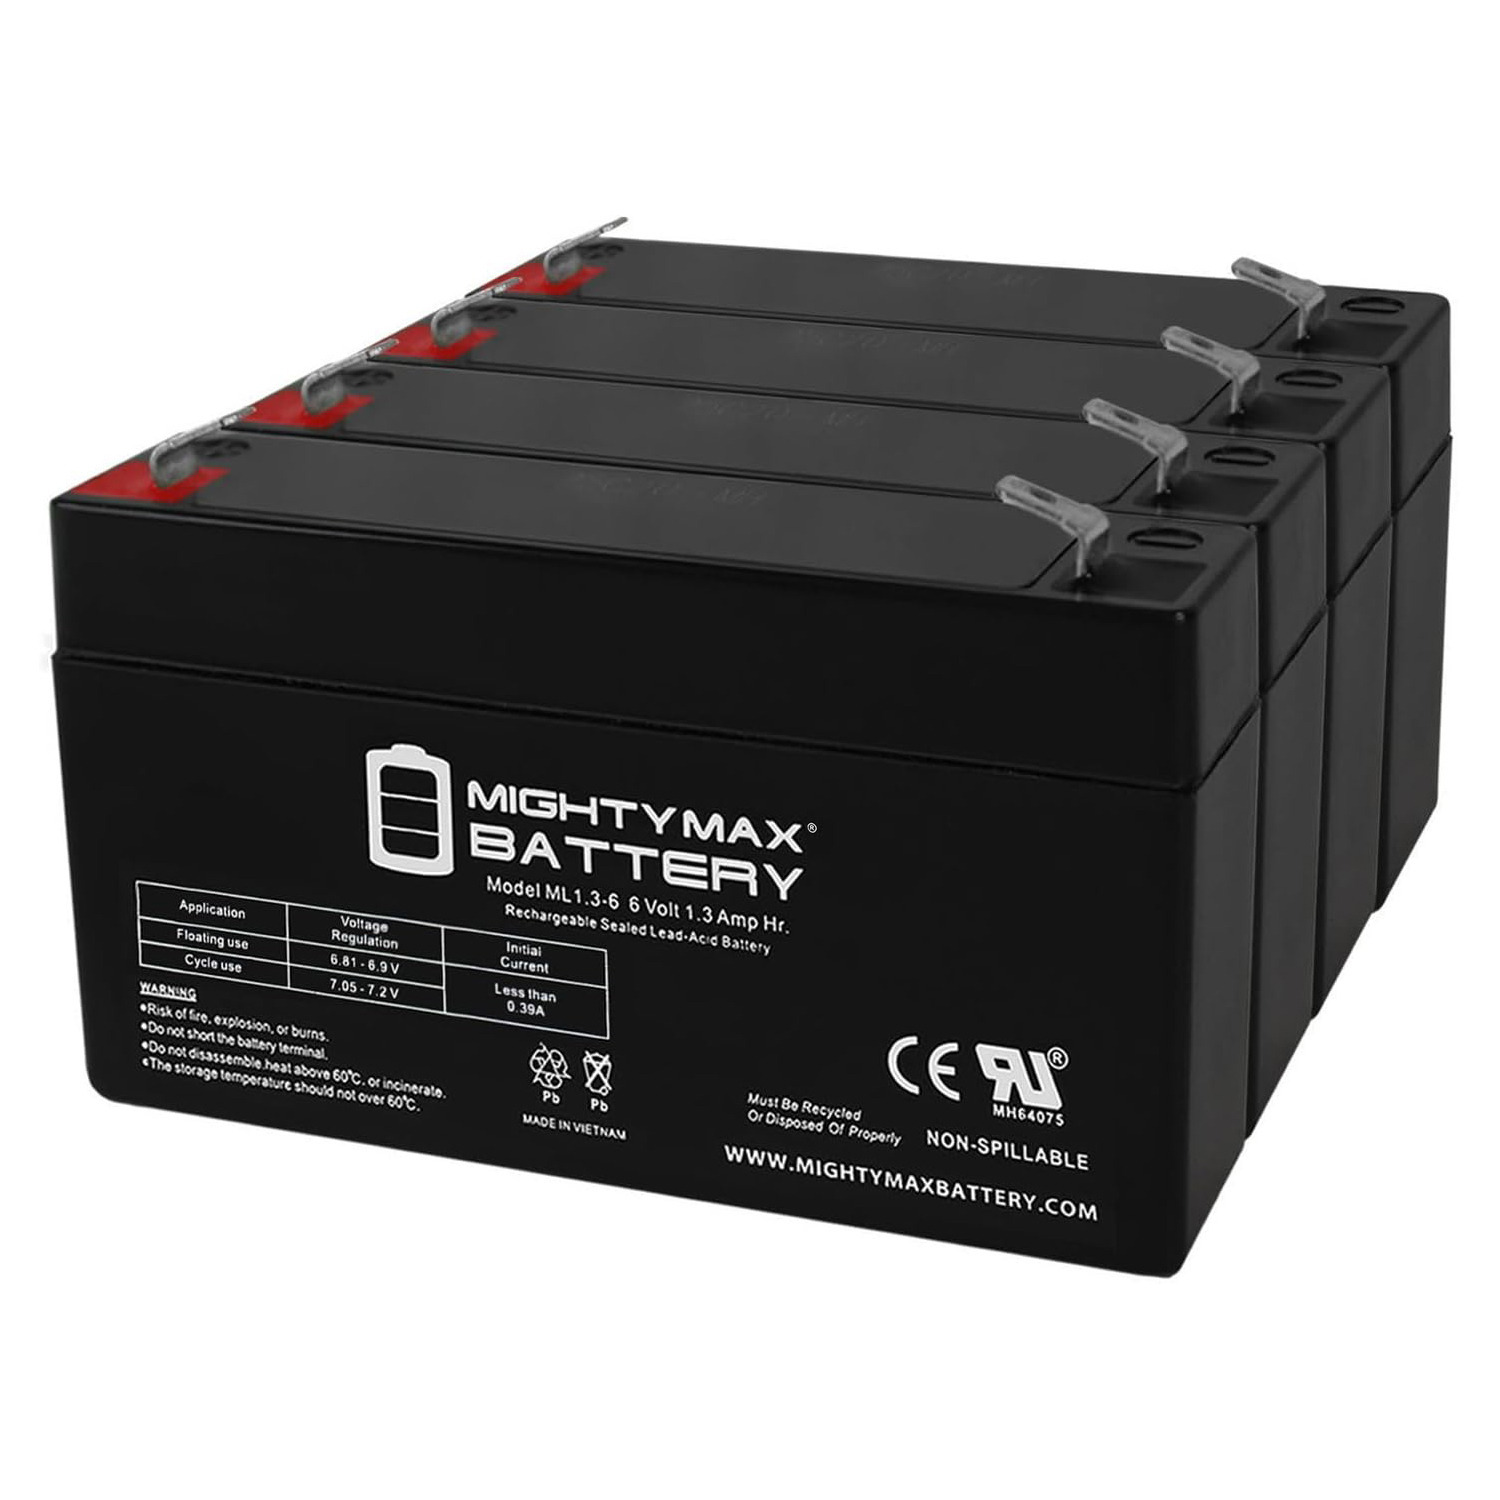 6V 1.3Ah Sonnenschein CR613 Emergency Light Battery - 4 Pack